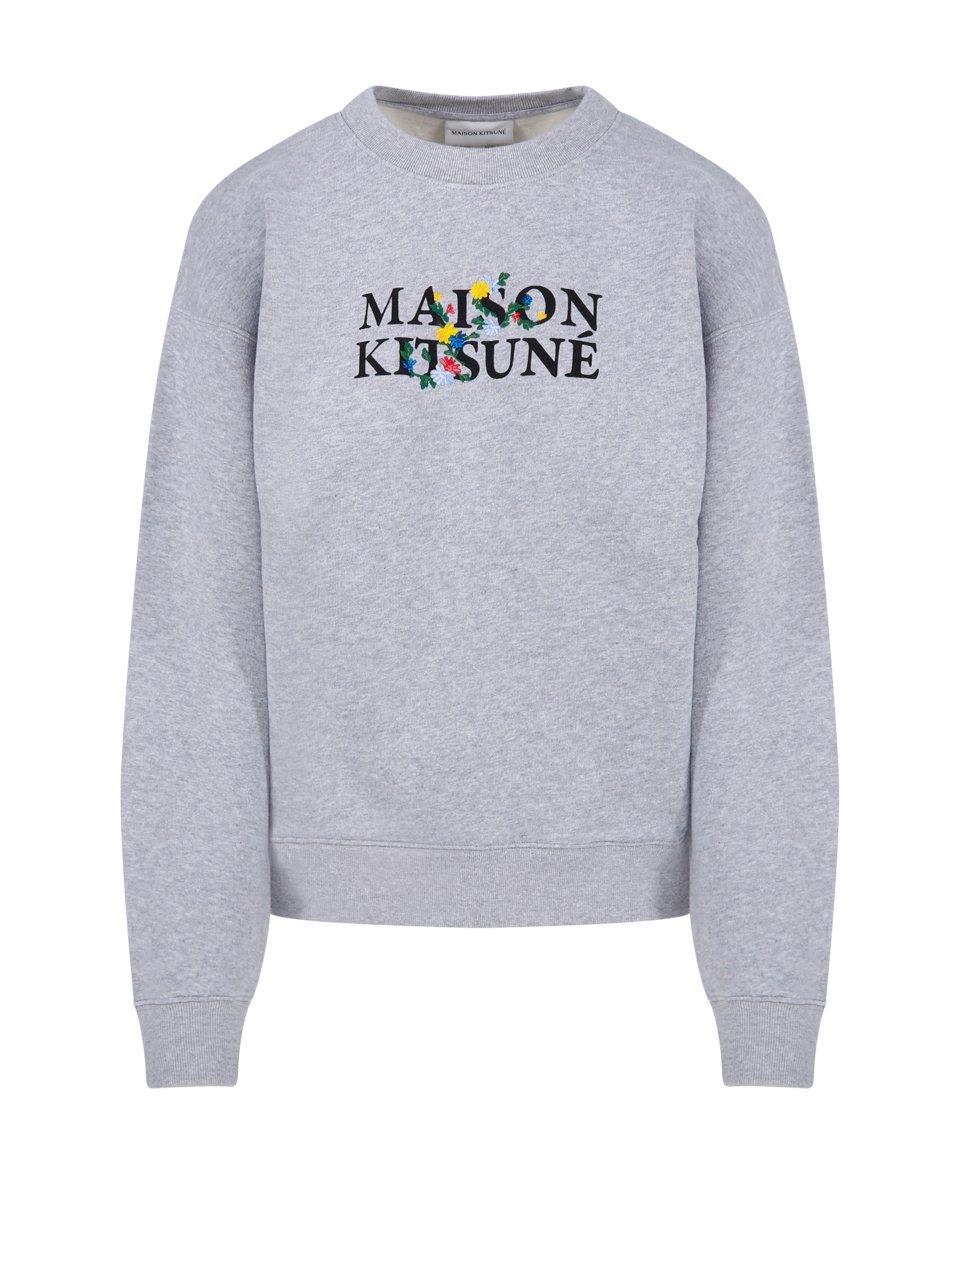 Maison Kitsuné Logo Printed Crewneck Sweatshirt In Light Grey Melange